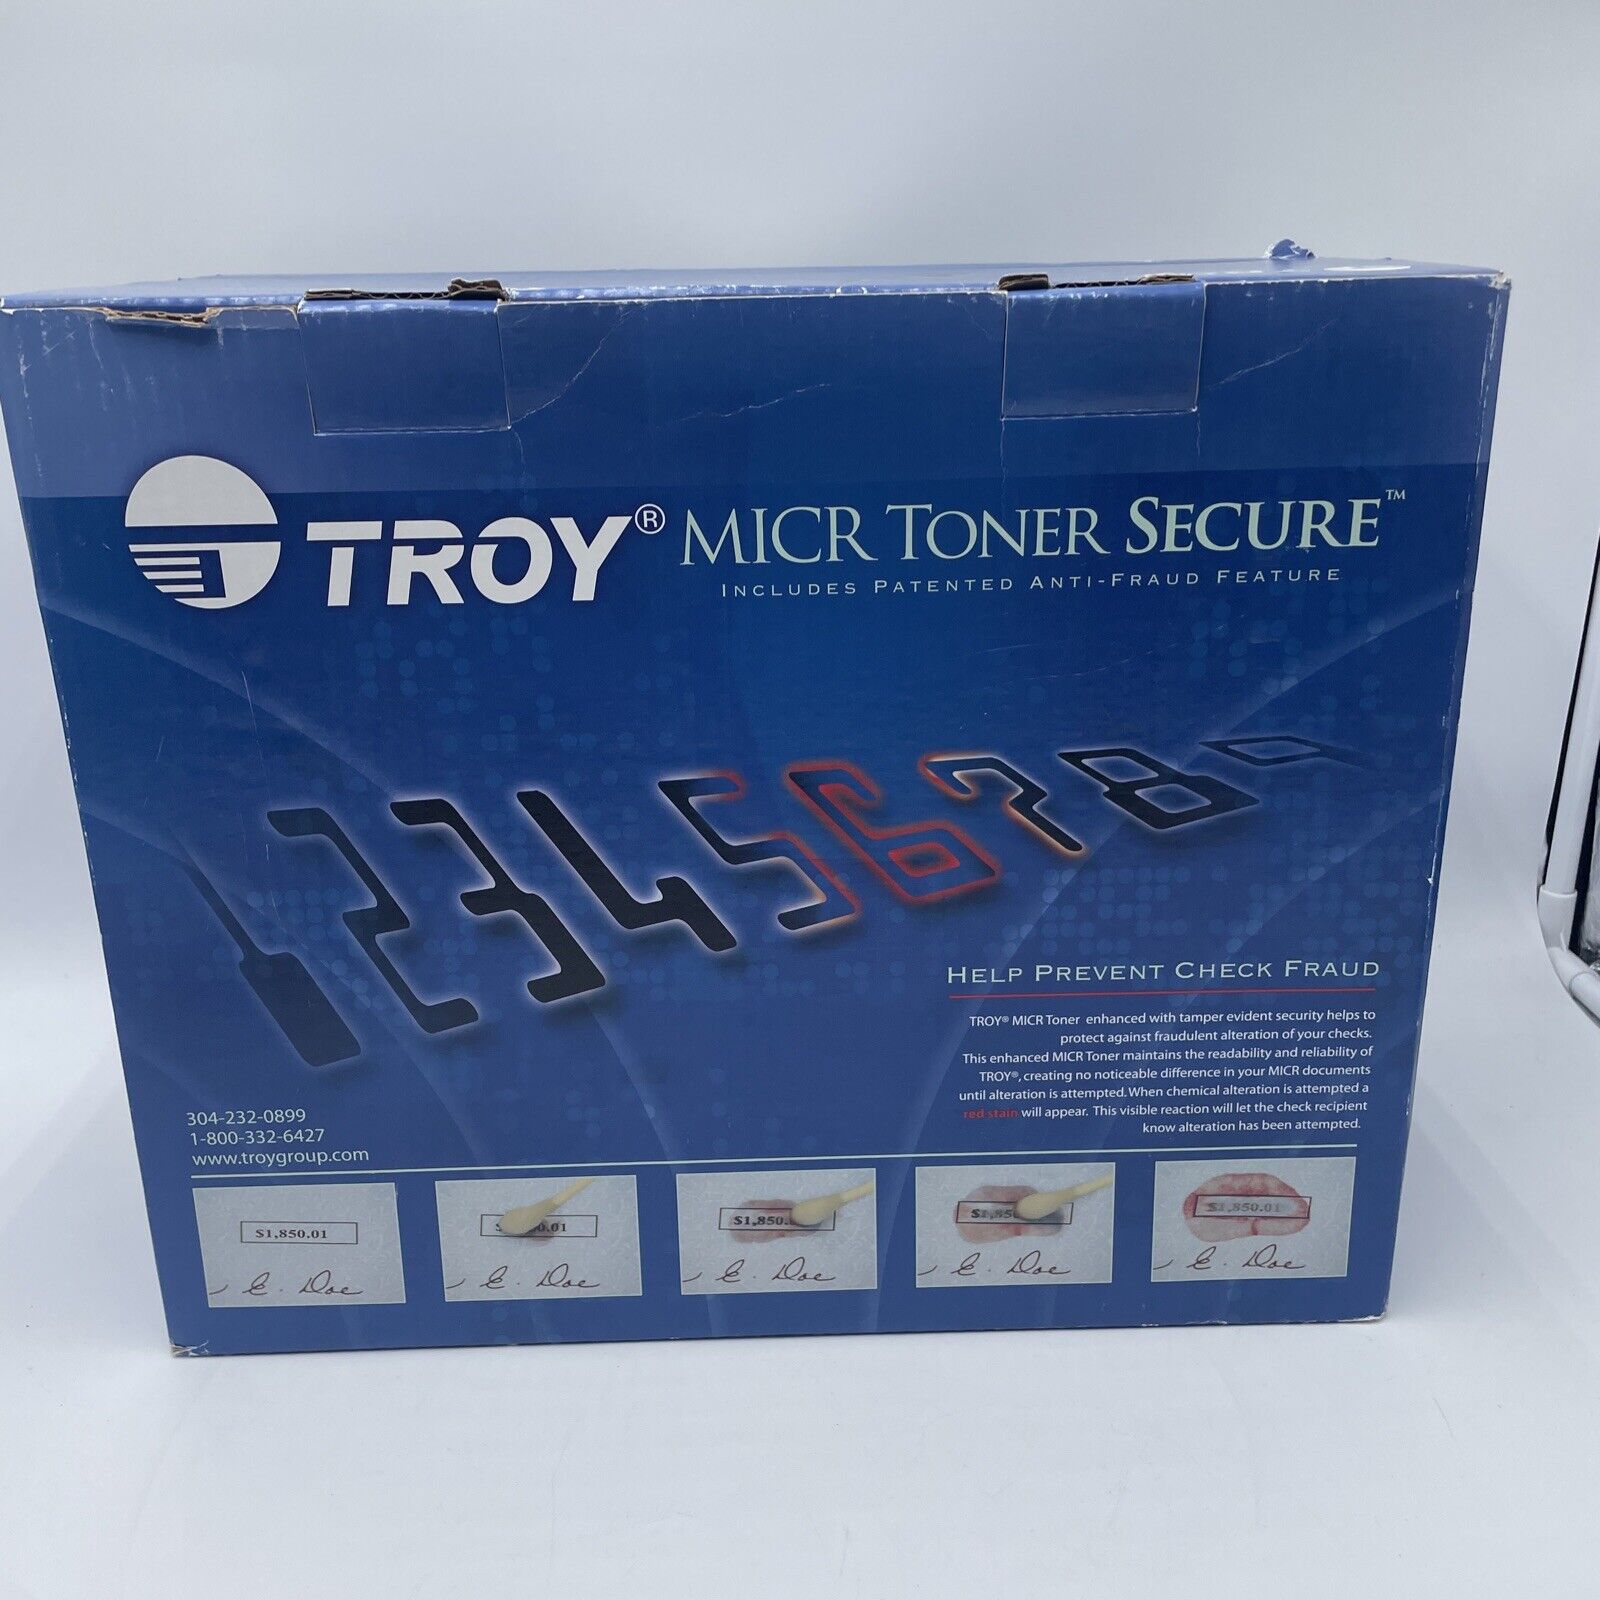 TROY 02-81350-001 Troy / Hp Laserjet M4555H Sd Secure Micr Toner New in box